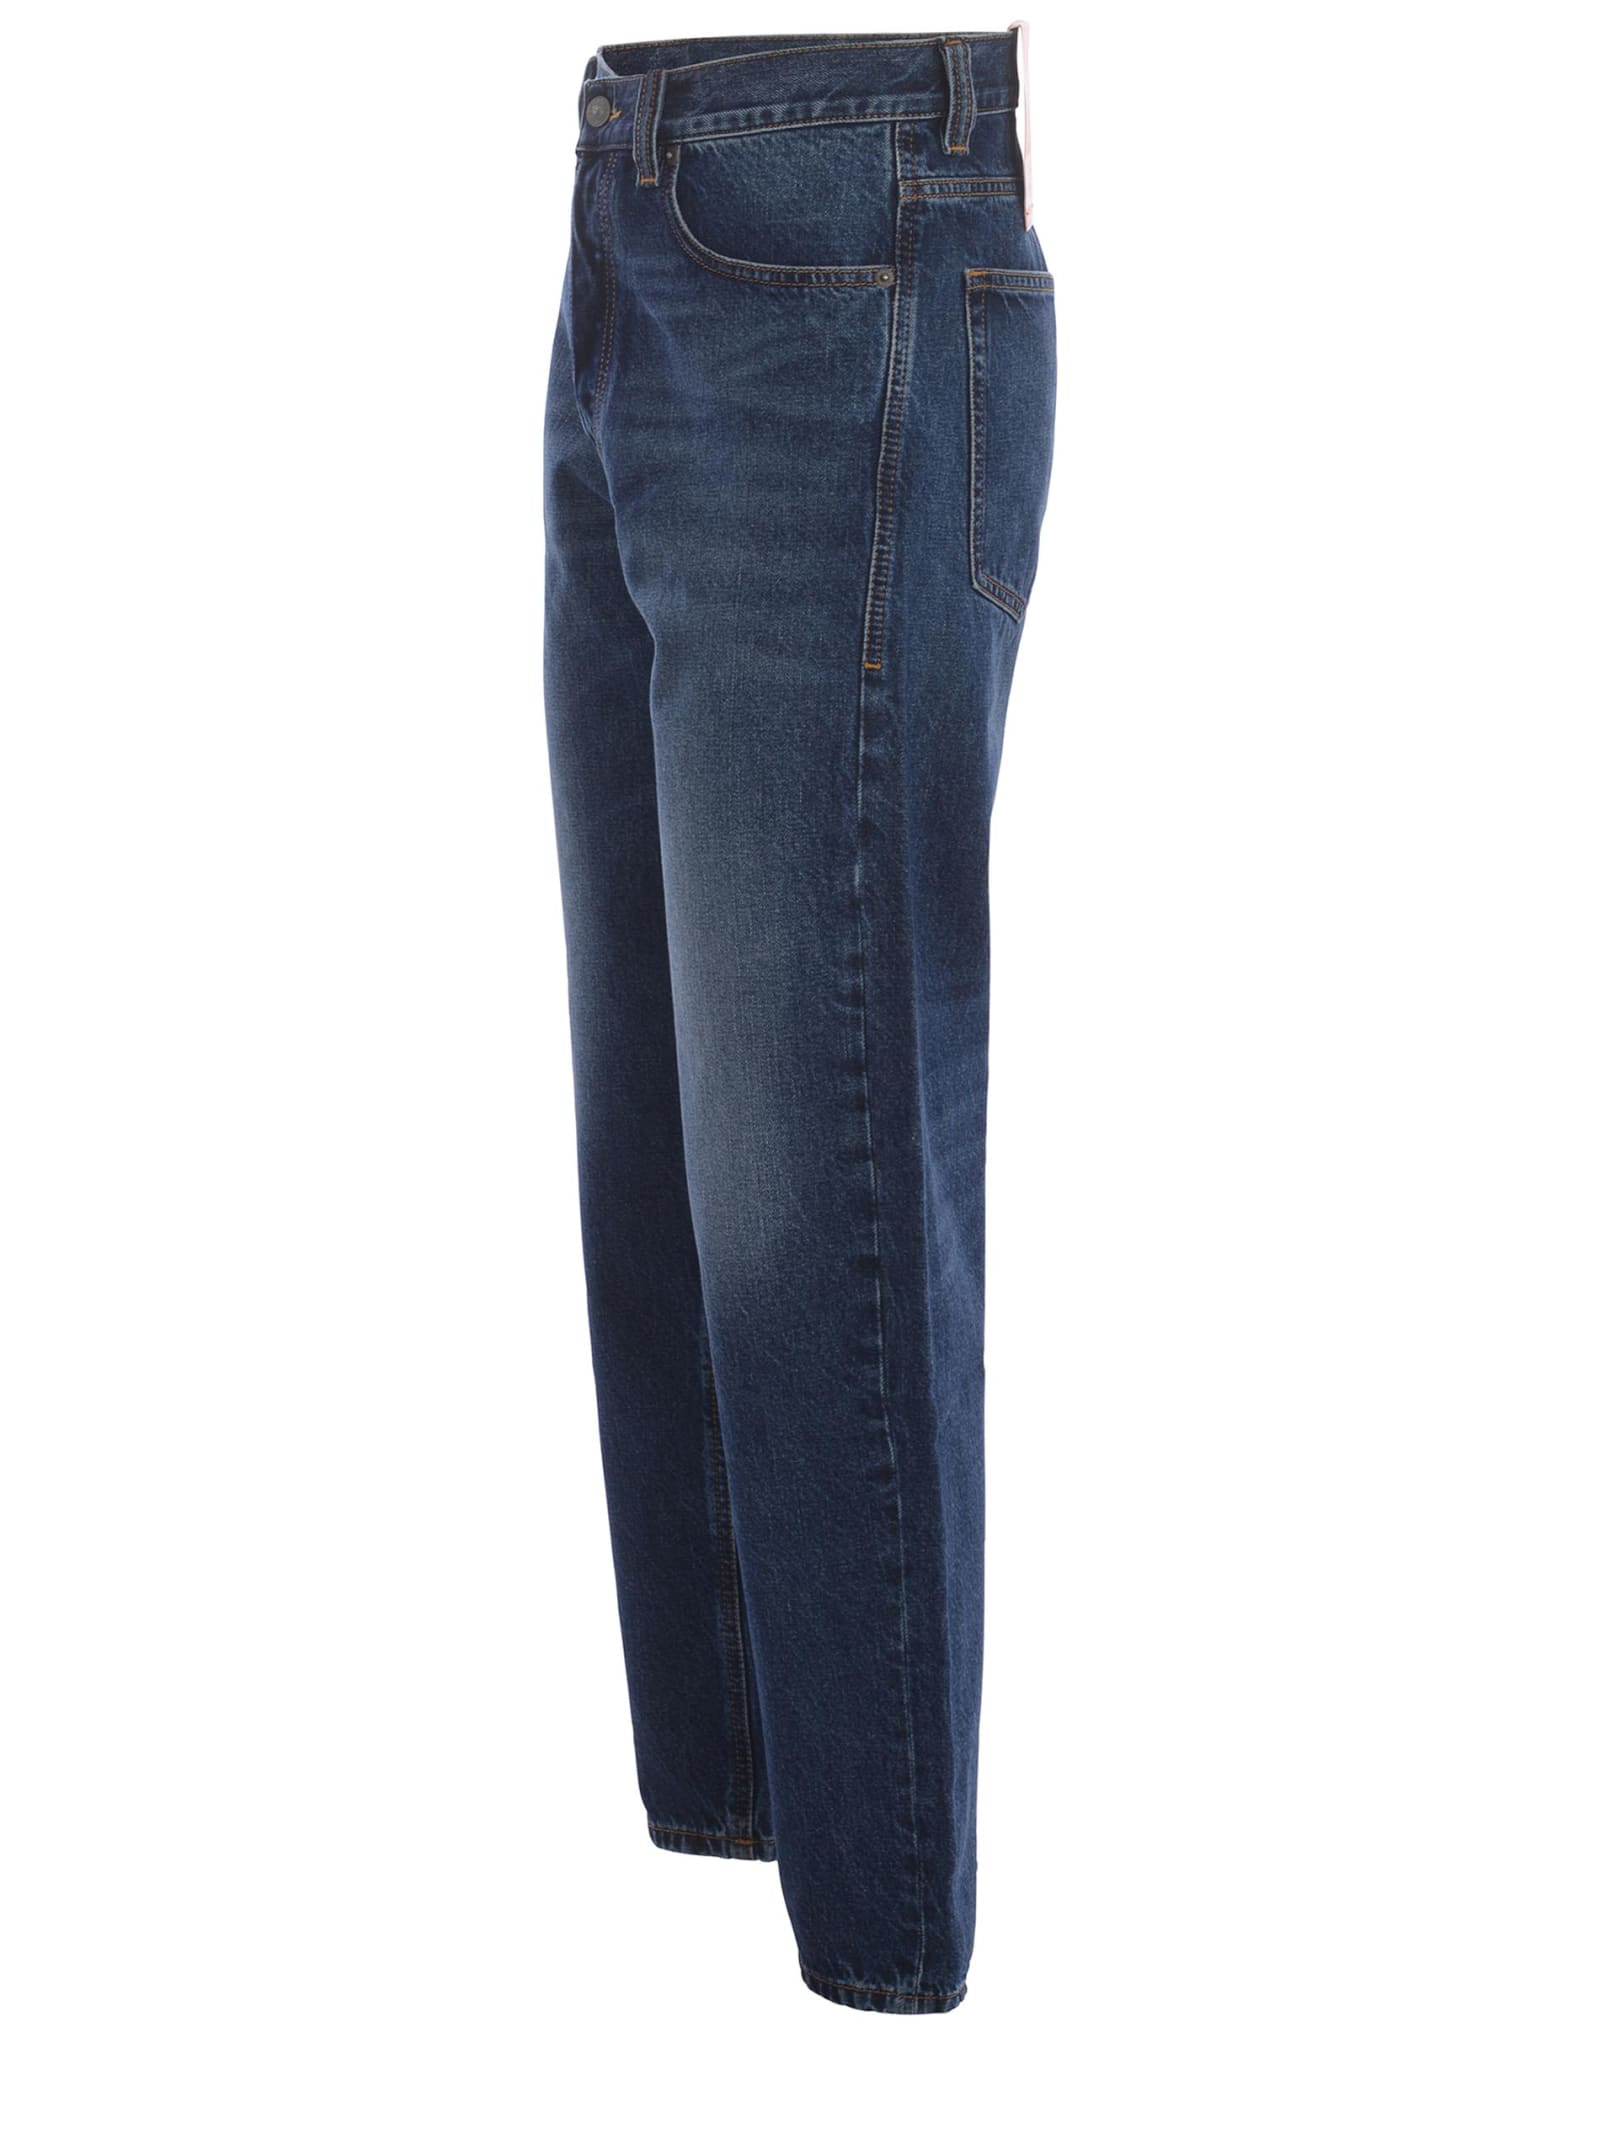 Shop Diesel Jeans  Macs Made Of Denim In Denim Blu